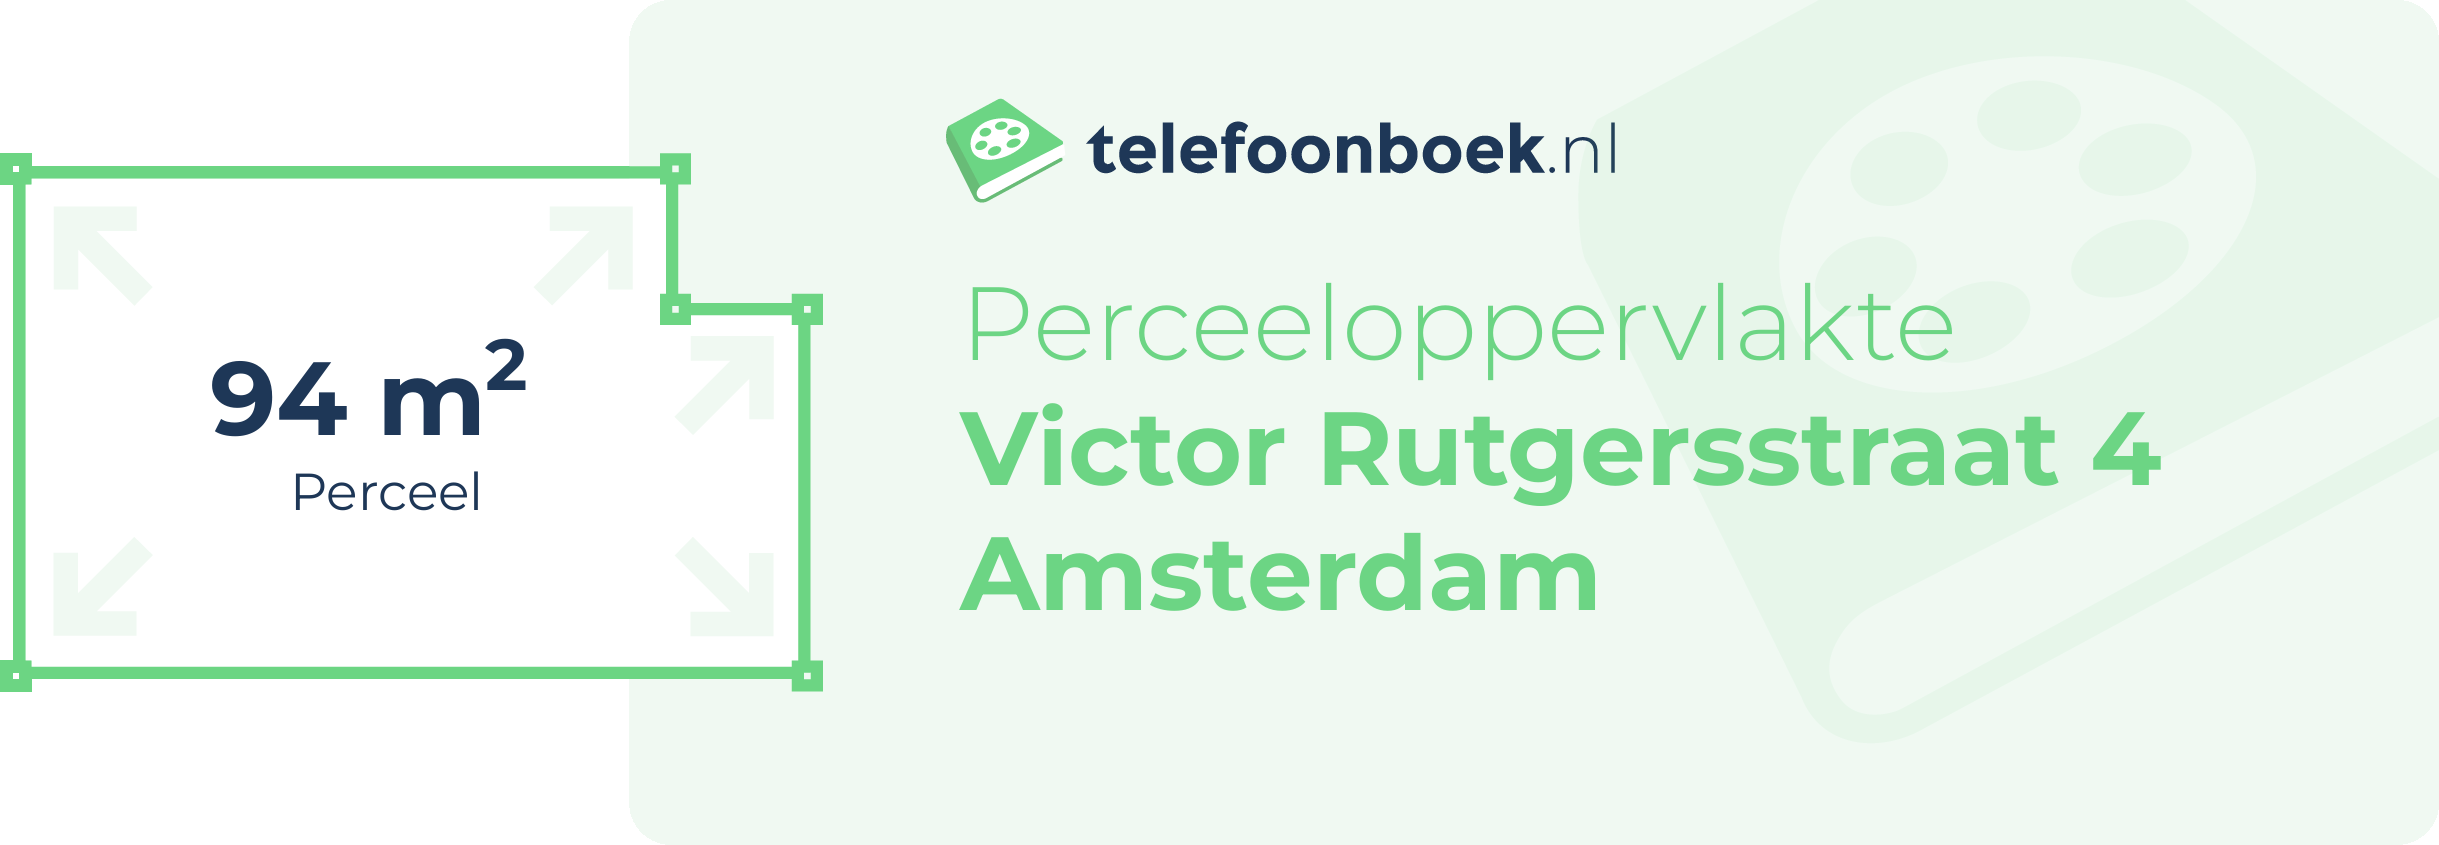 Perceeloppervlakte Victor Rutgersstraat 4 Amsterdam